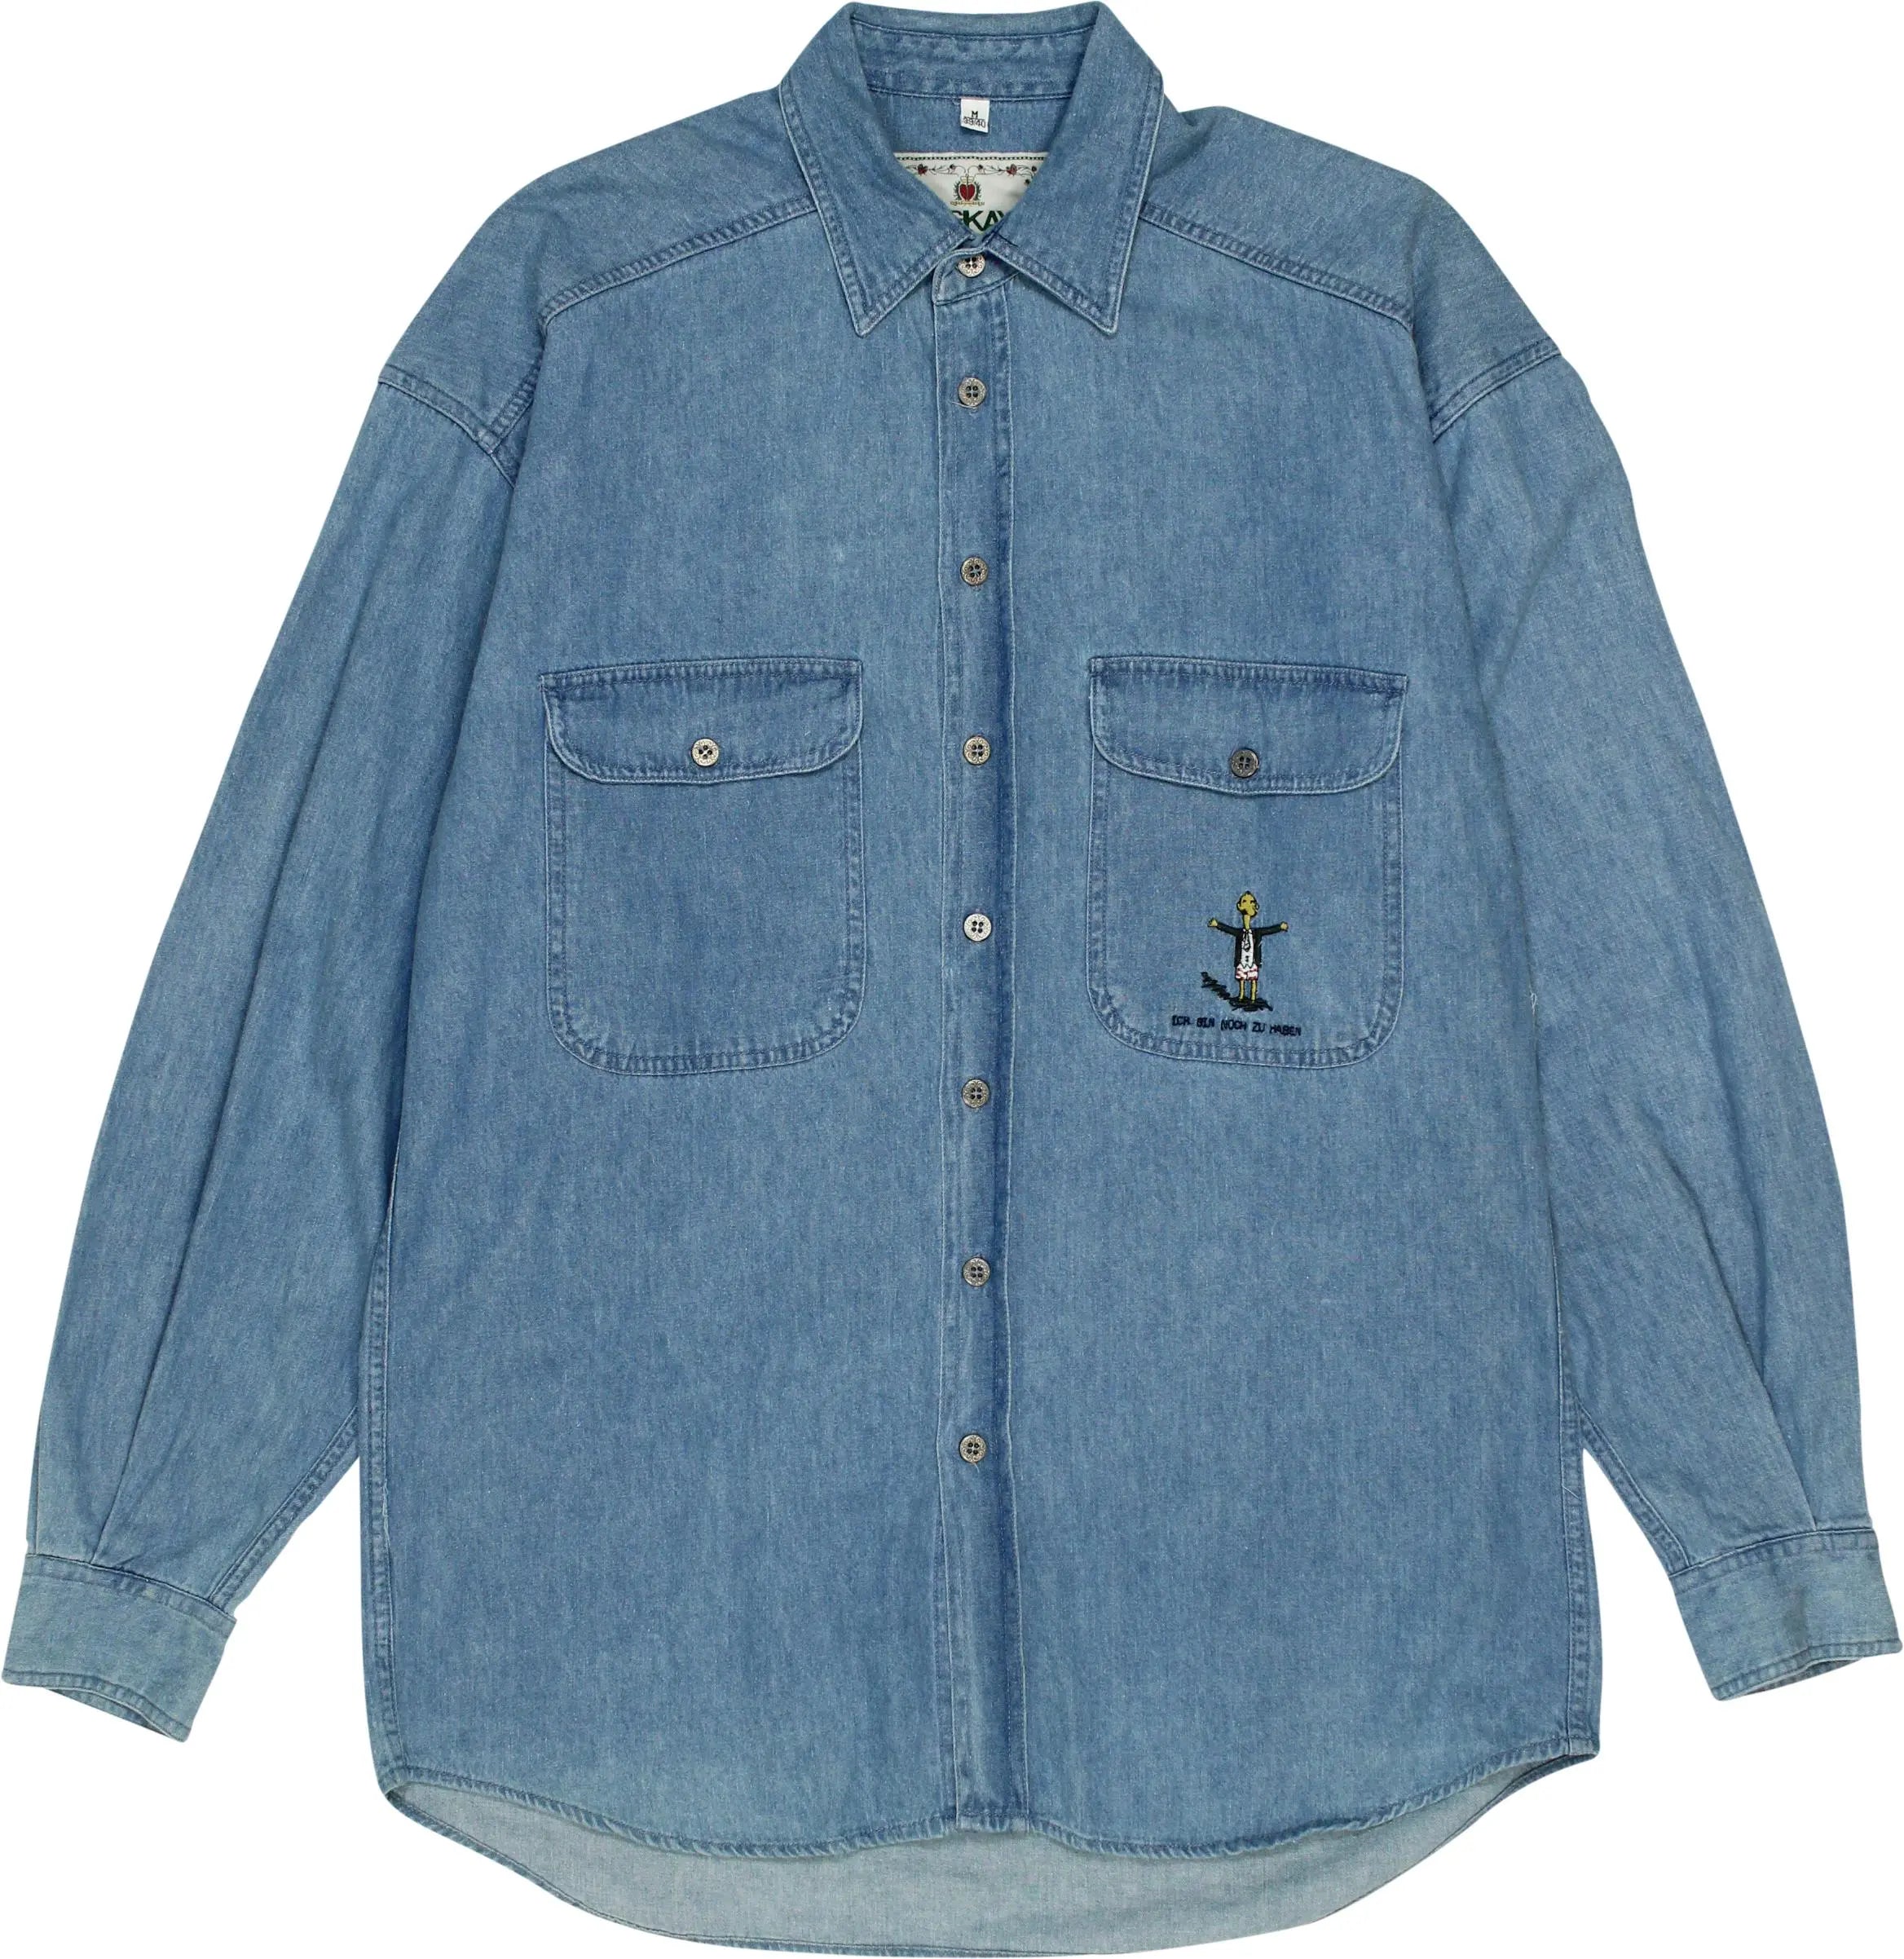 McKay - Vintage Denim Shirt- ThriftTale.com - Vintage and second handclothing